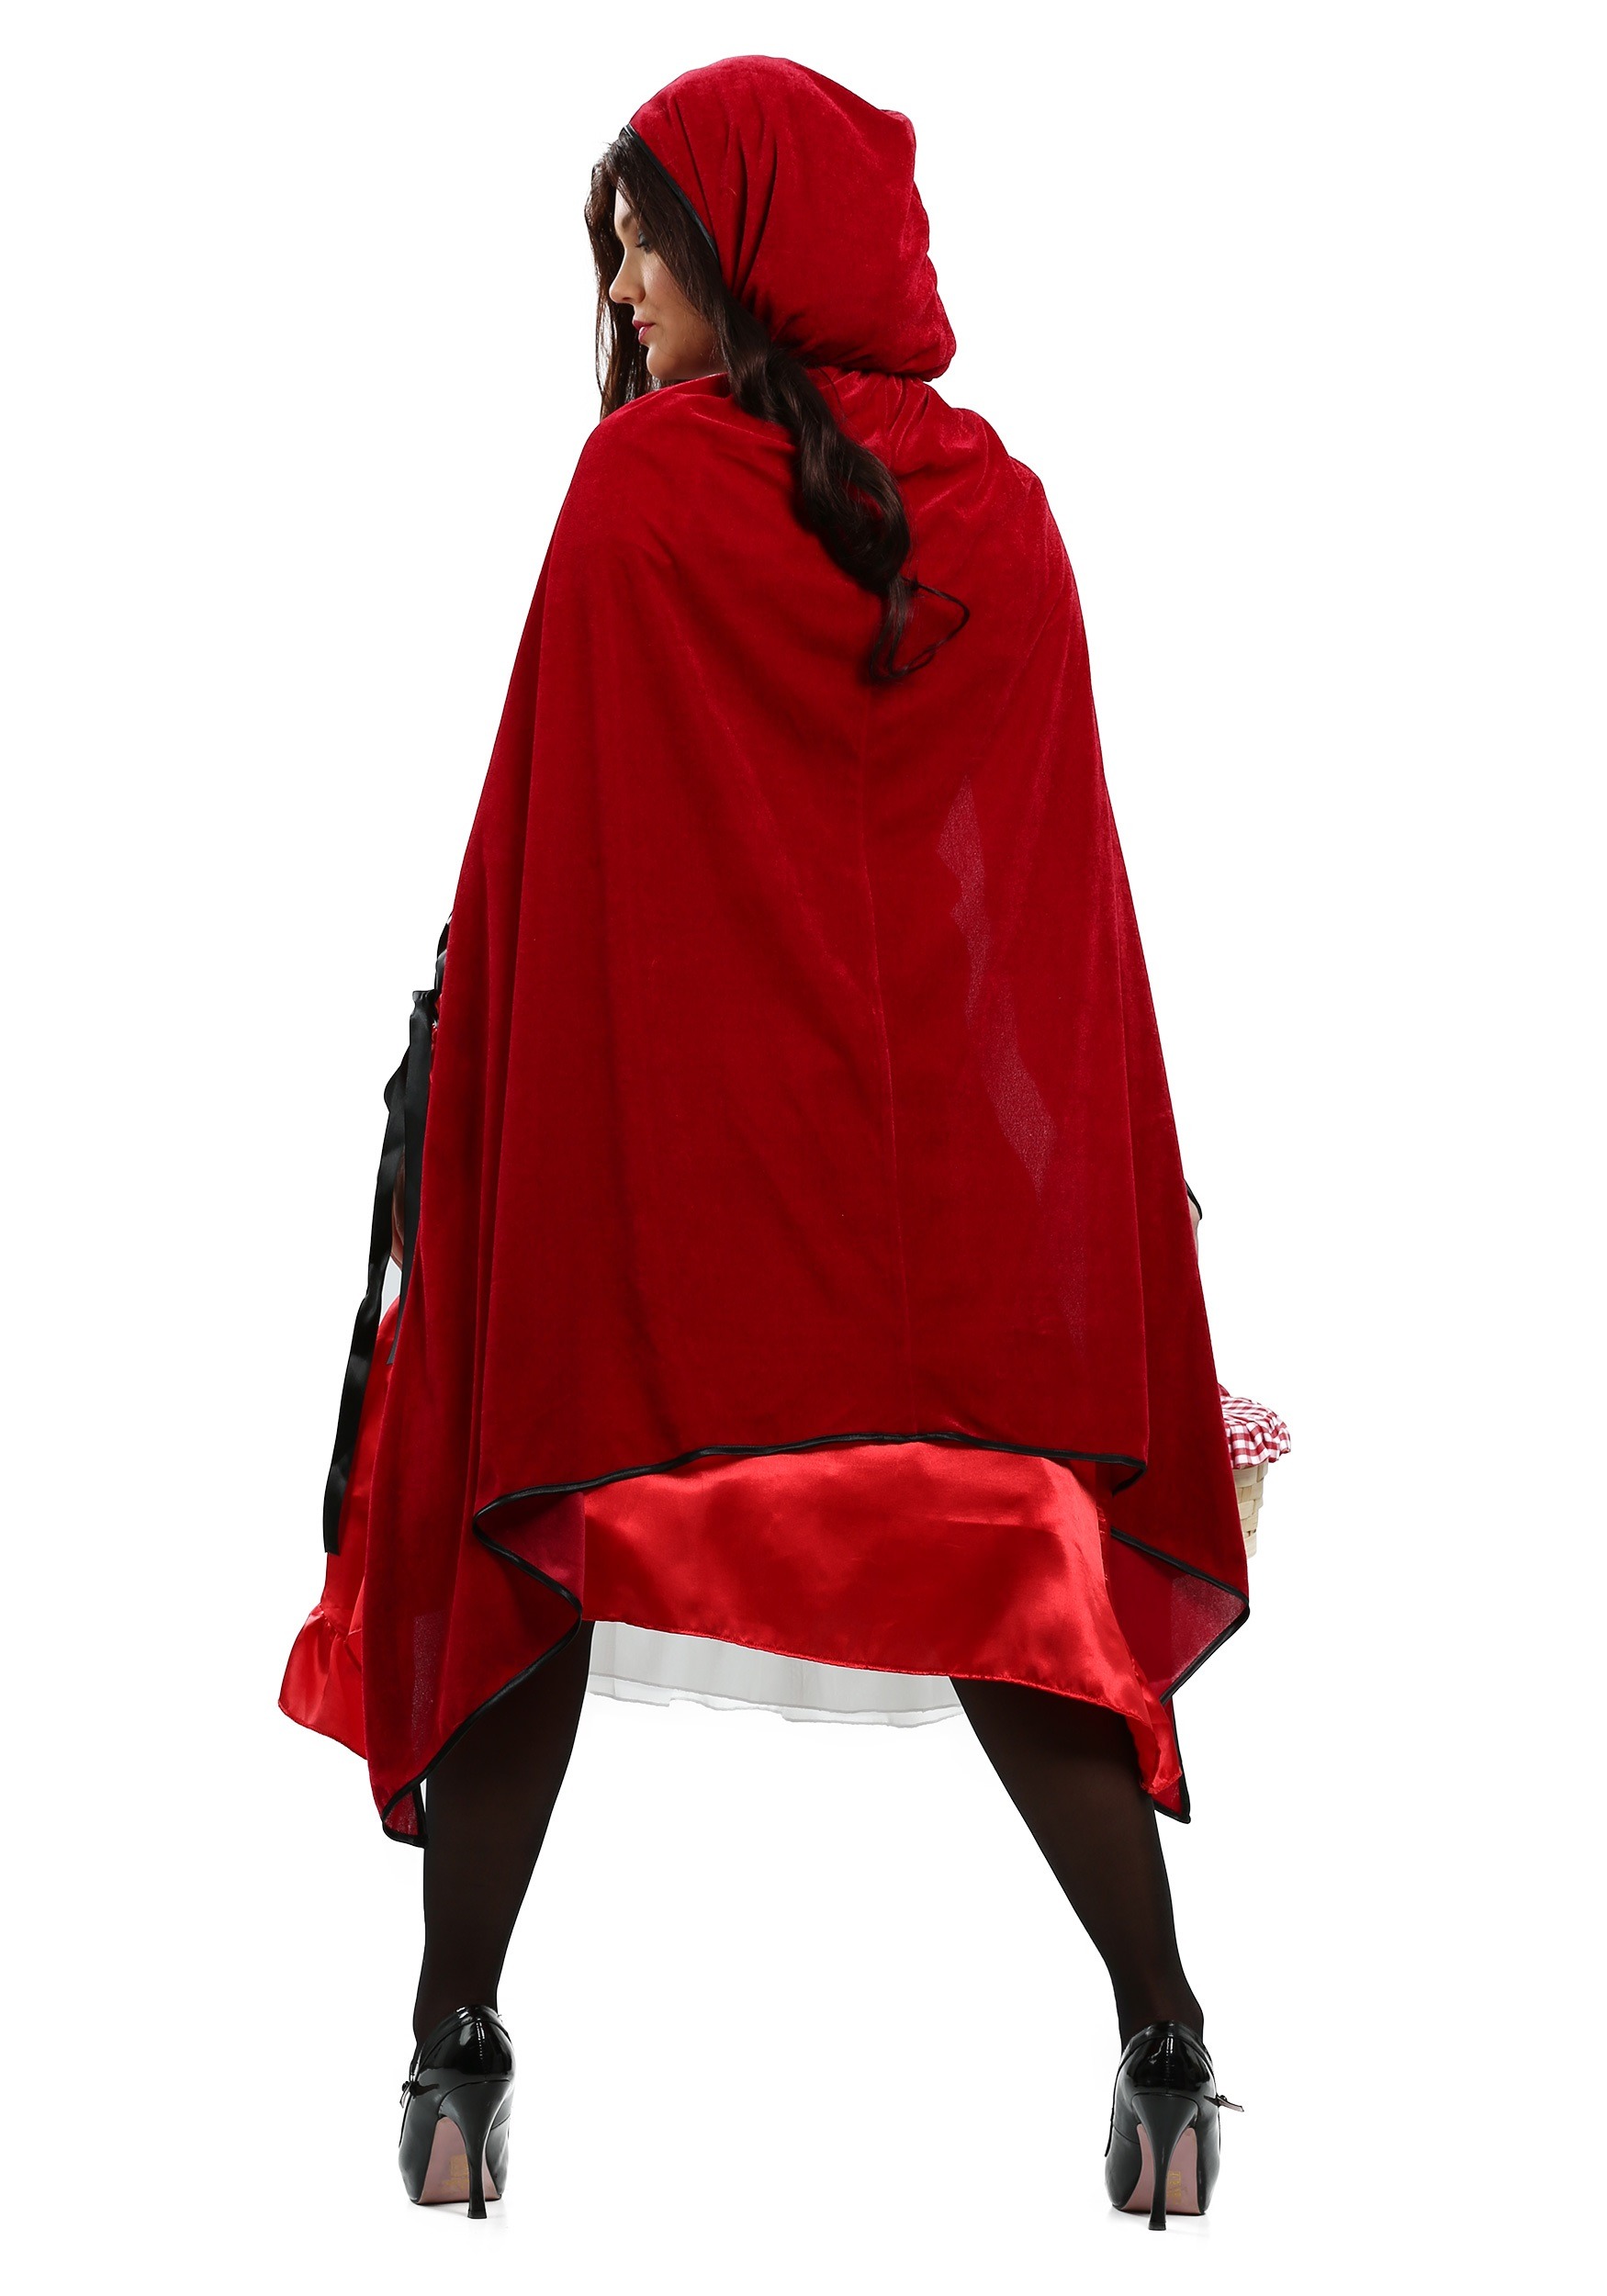 Gothic Riding Hood - Choco Express Disfraces caperucita roja